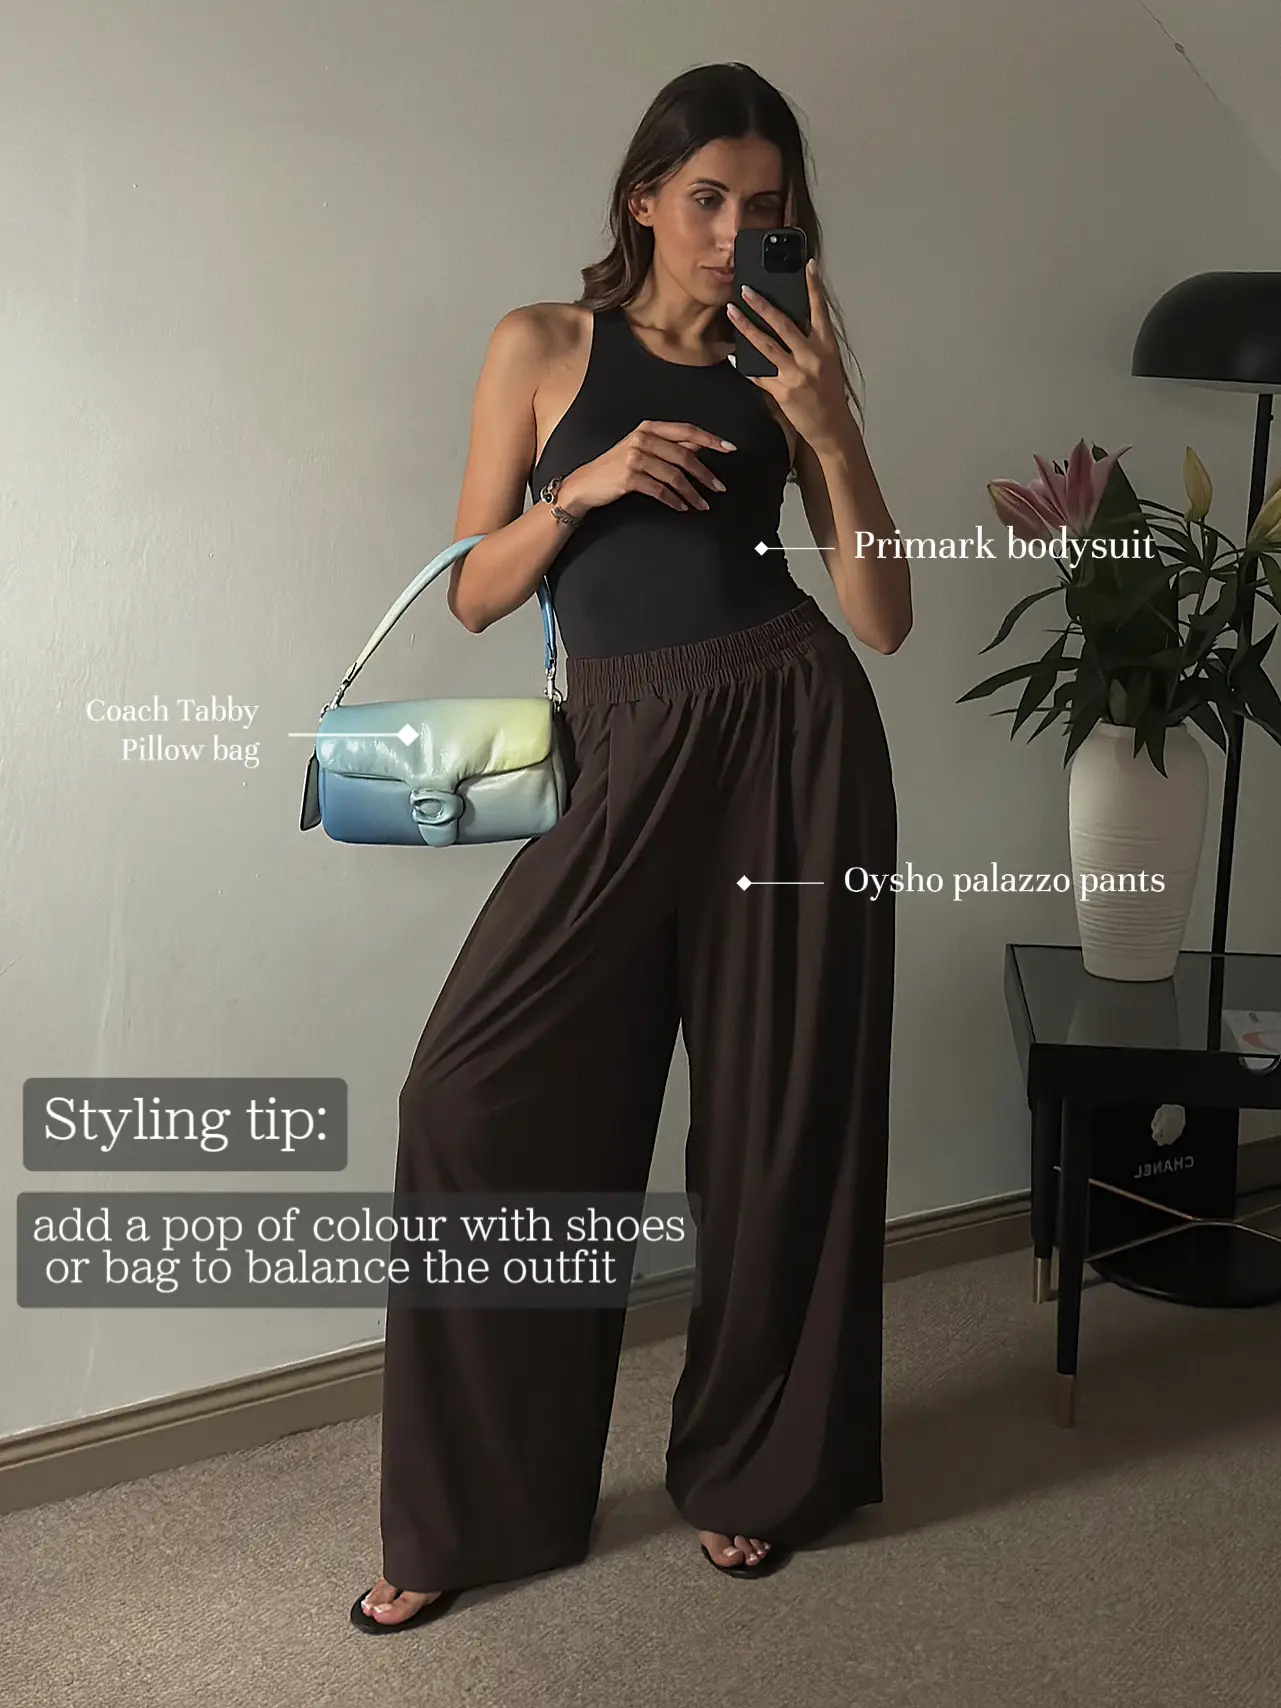 classy palazzo pants outfit ideas - Lemon8 Search